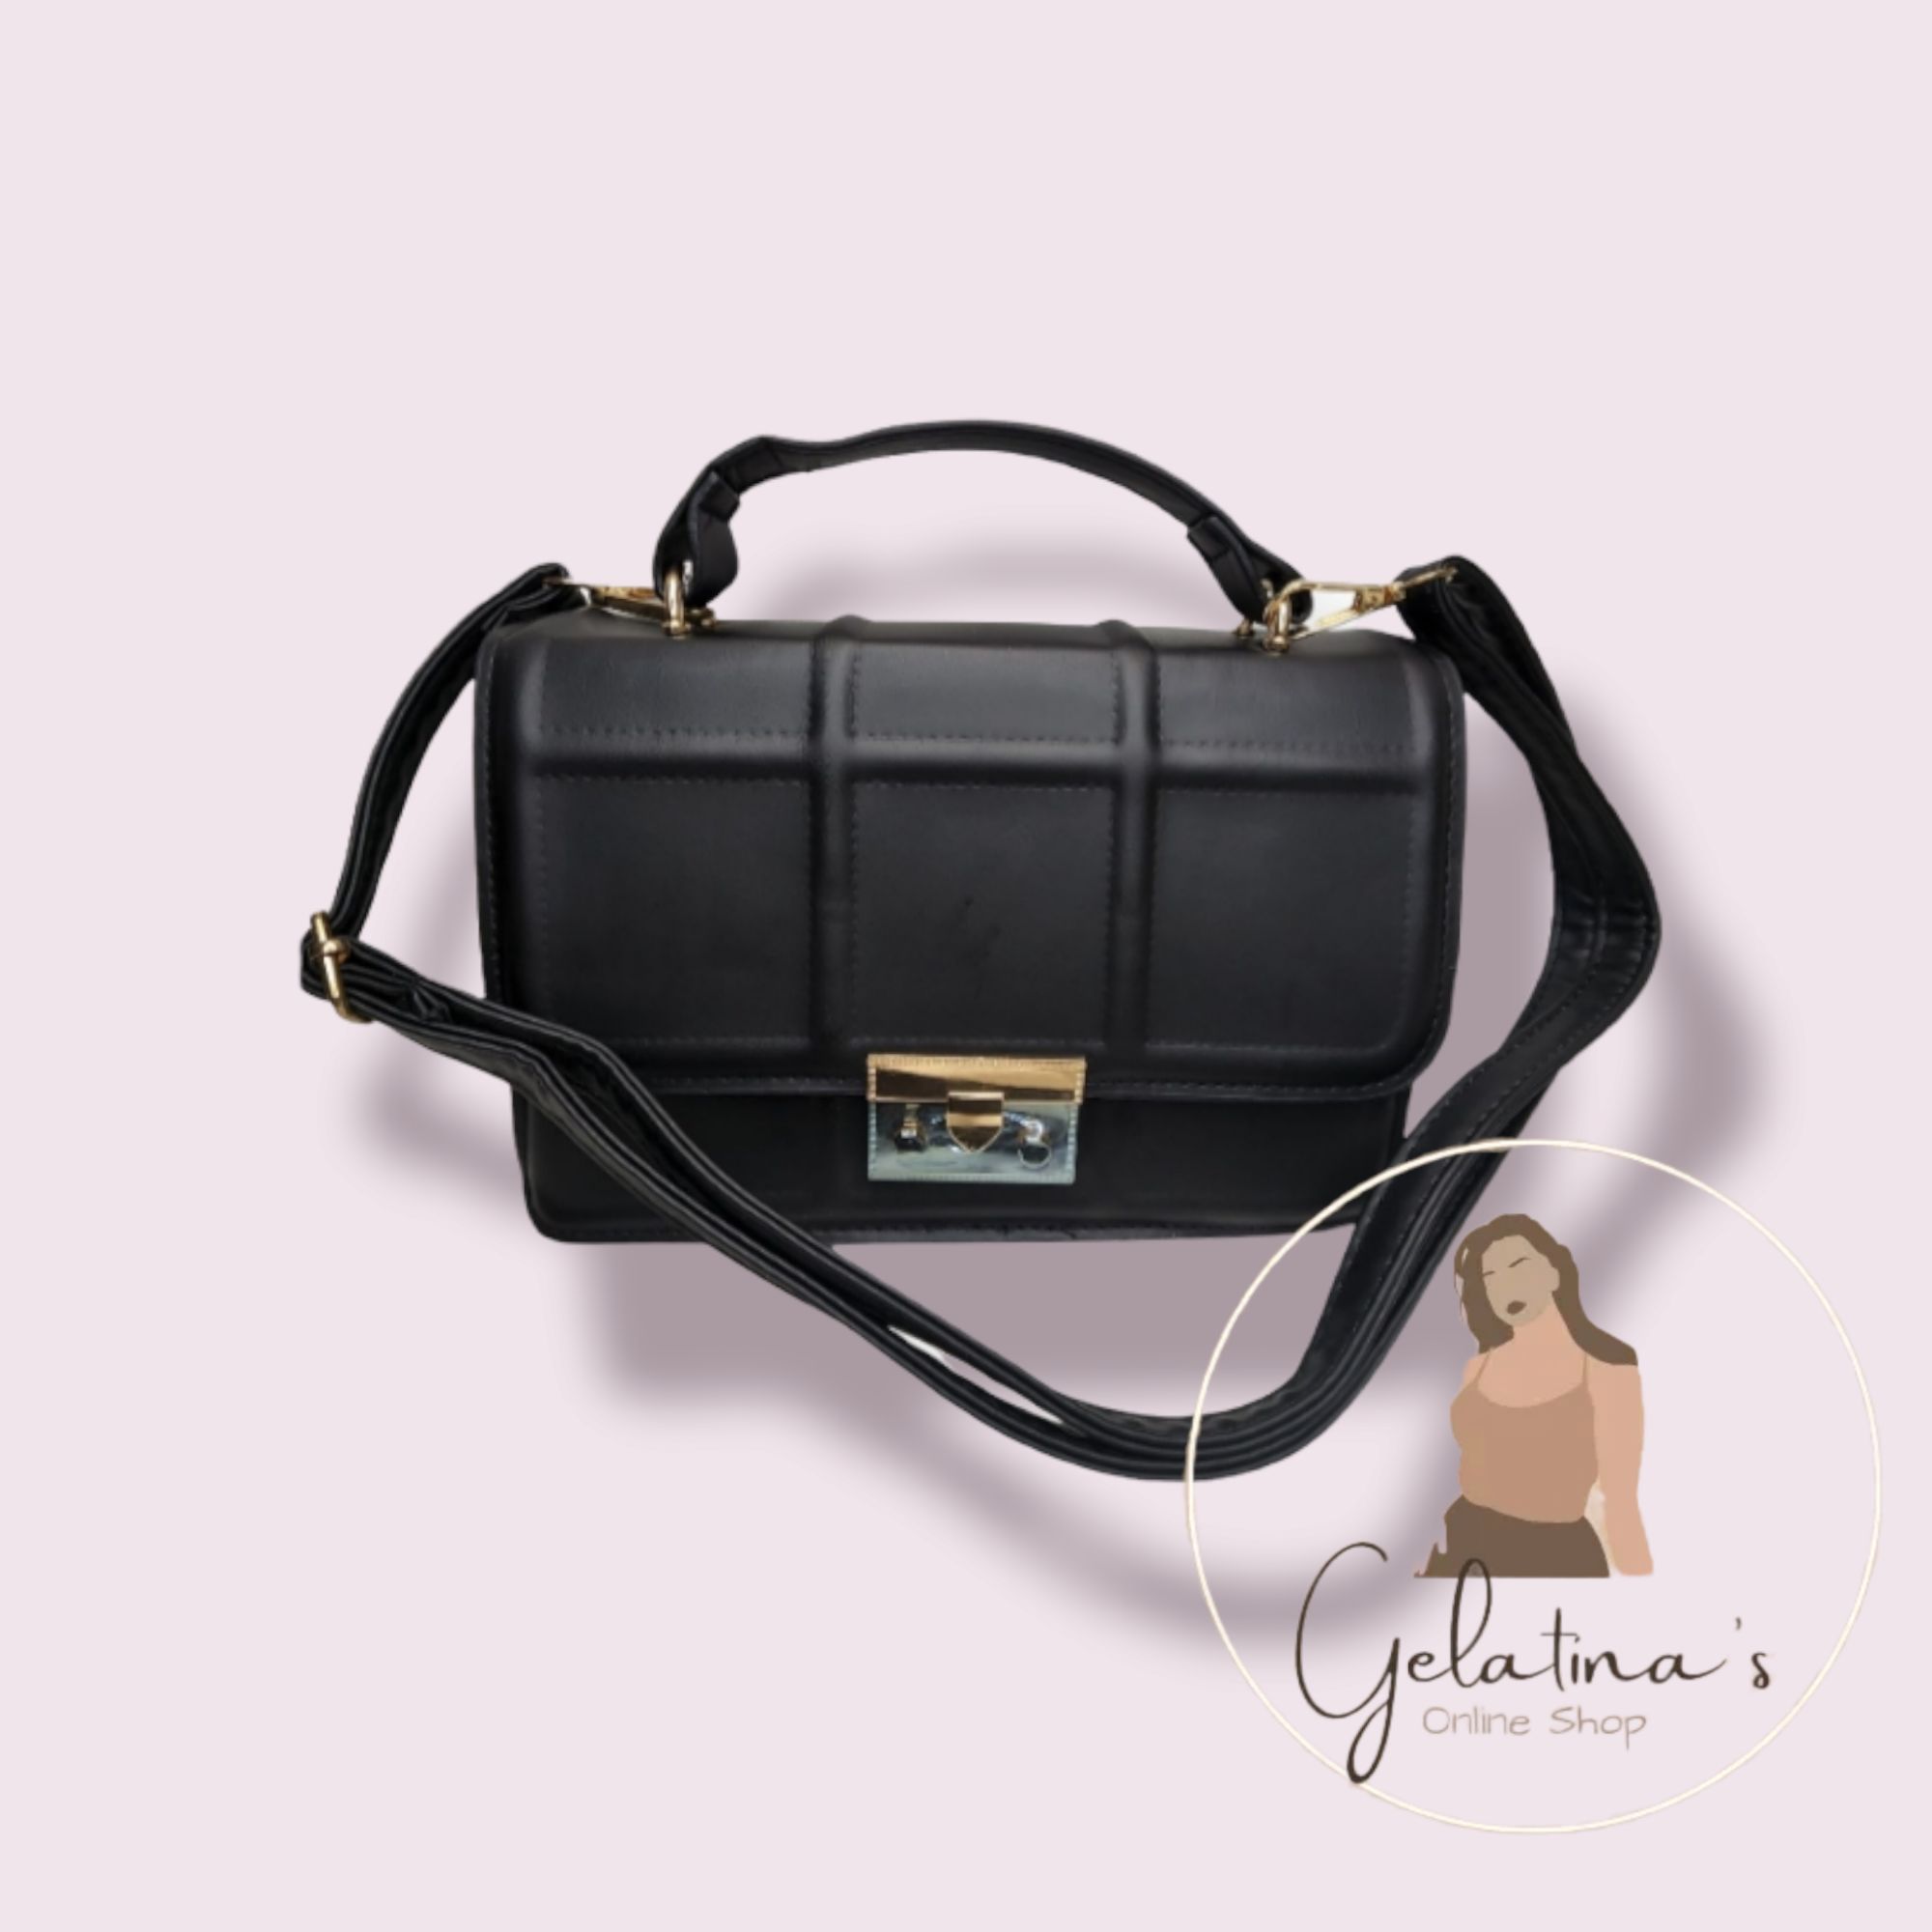 Heart Evangelista unboxes her new Hermès bag